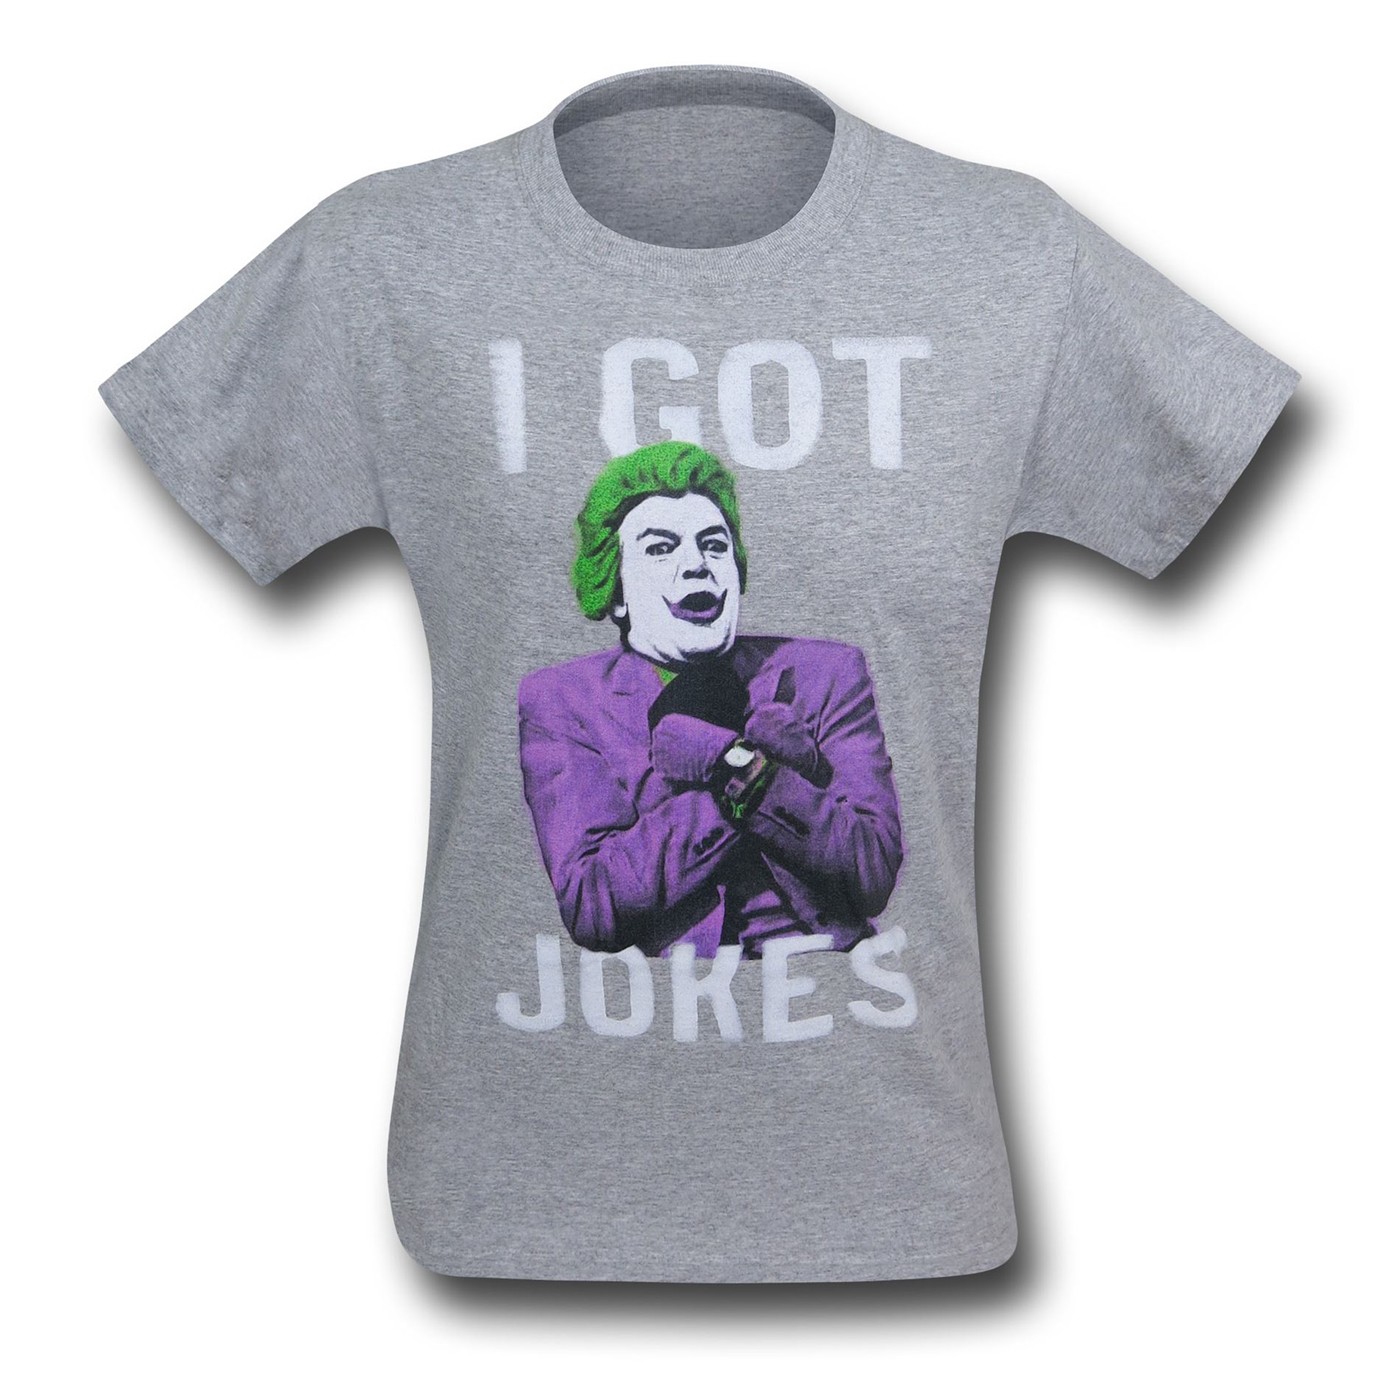 Joker 66 I Got Jokes T-Shirt